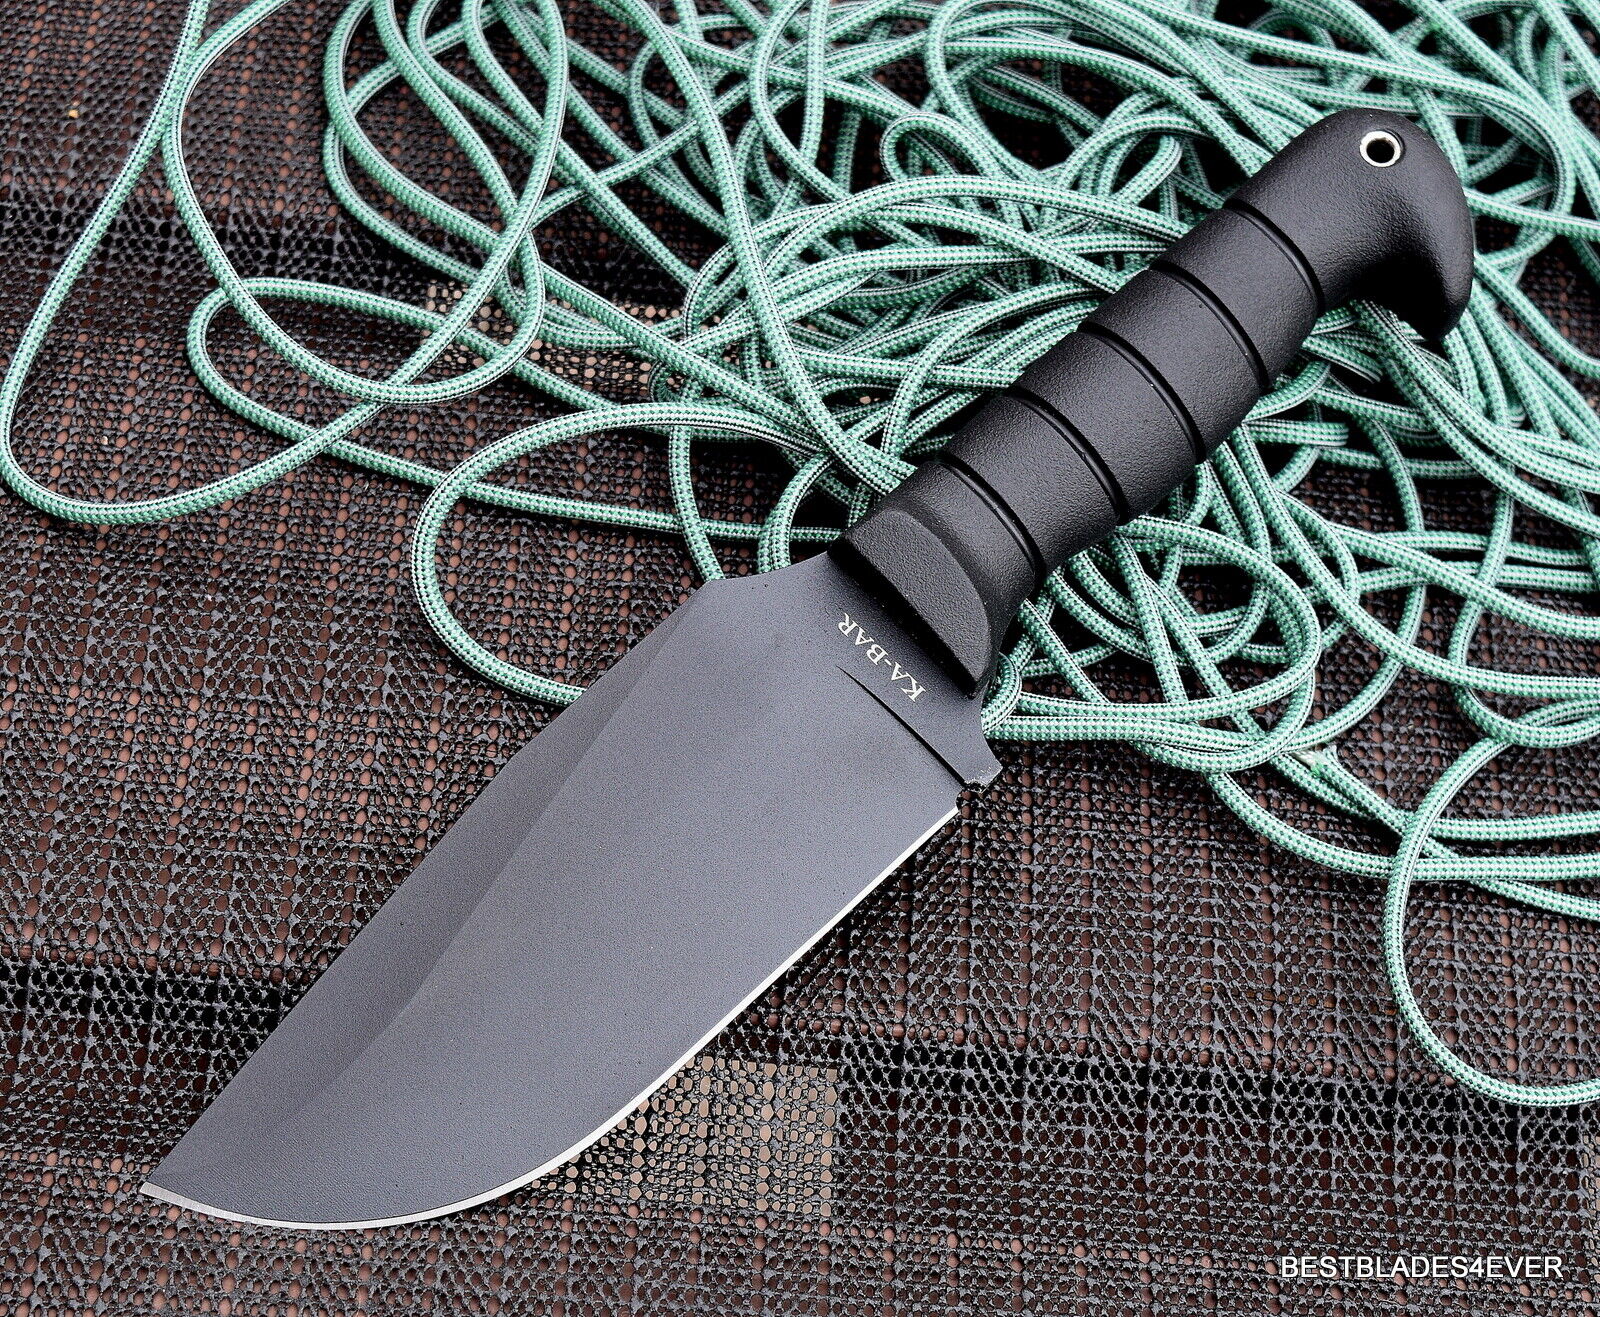 12.25 INCHES KABAR HEAVY DUTY WARTHOG FIXED BLADE KNIFE RAZOR SHARP WITH SHEATH